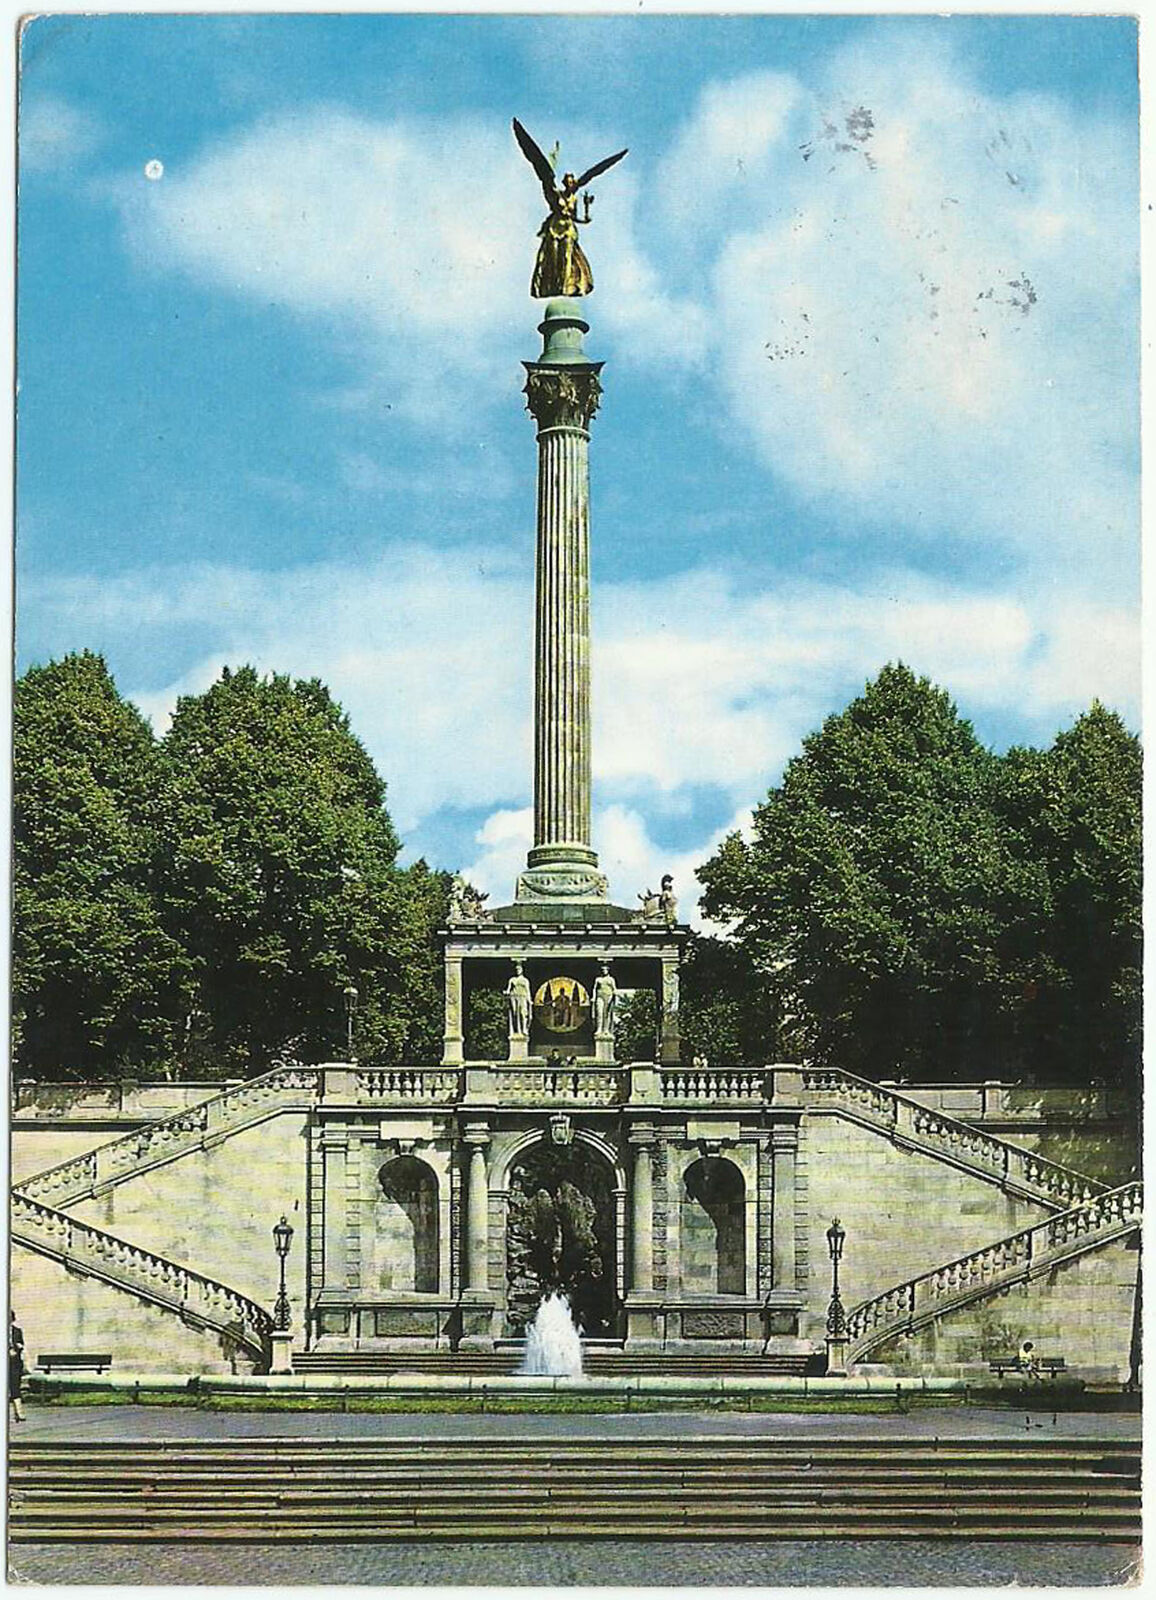 Munich Germany, Vintage Postcard, Angel of Peace-Friedensengel Monument, 1963